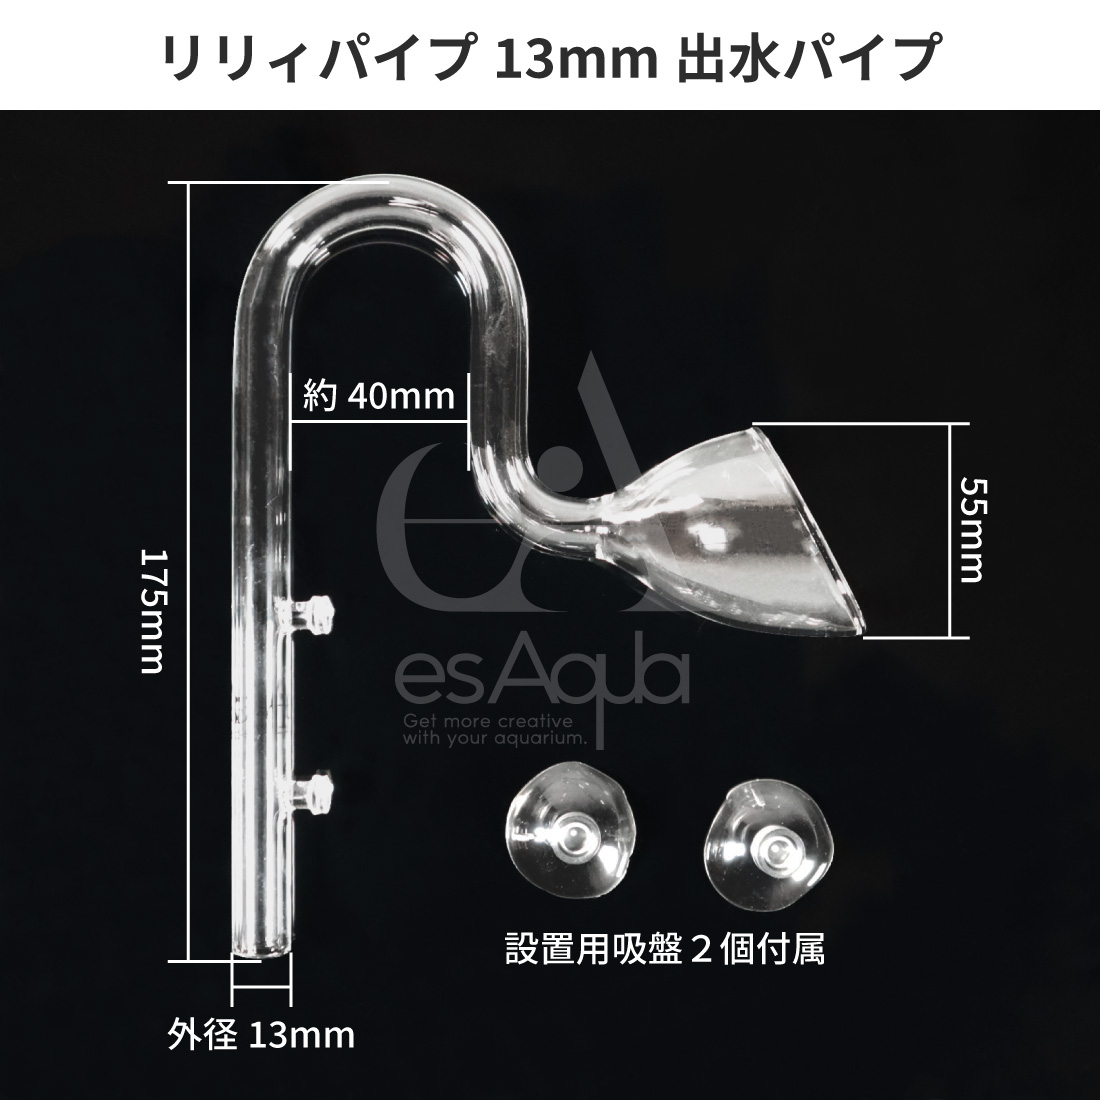 esAqua 水槽 ガラスパイプ【ハイクリアガラス採用】リリィパイプ 